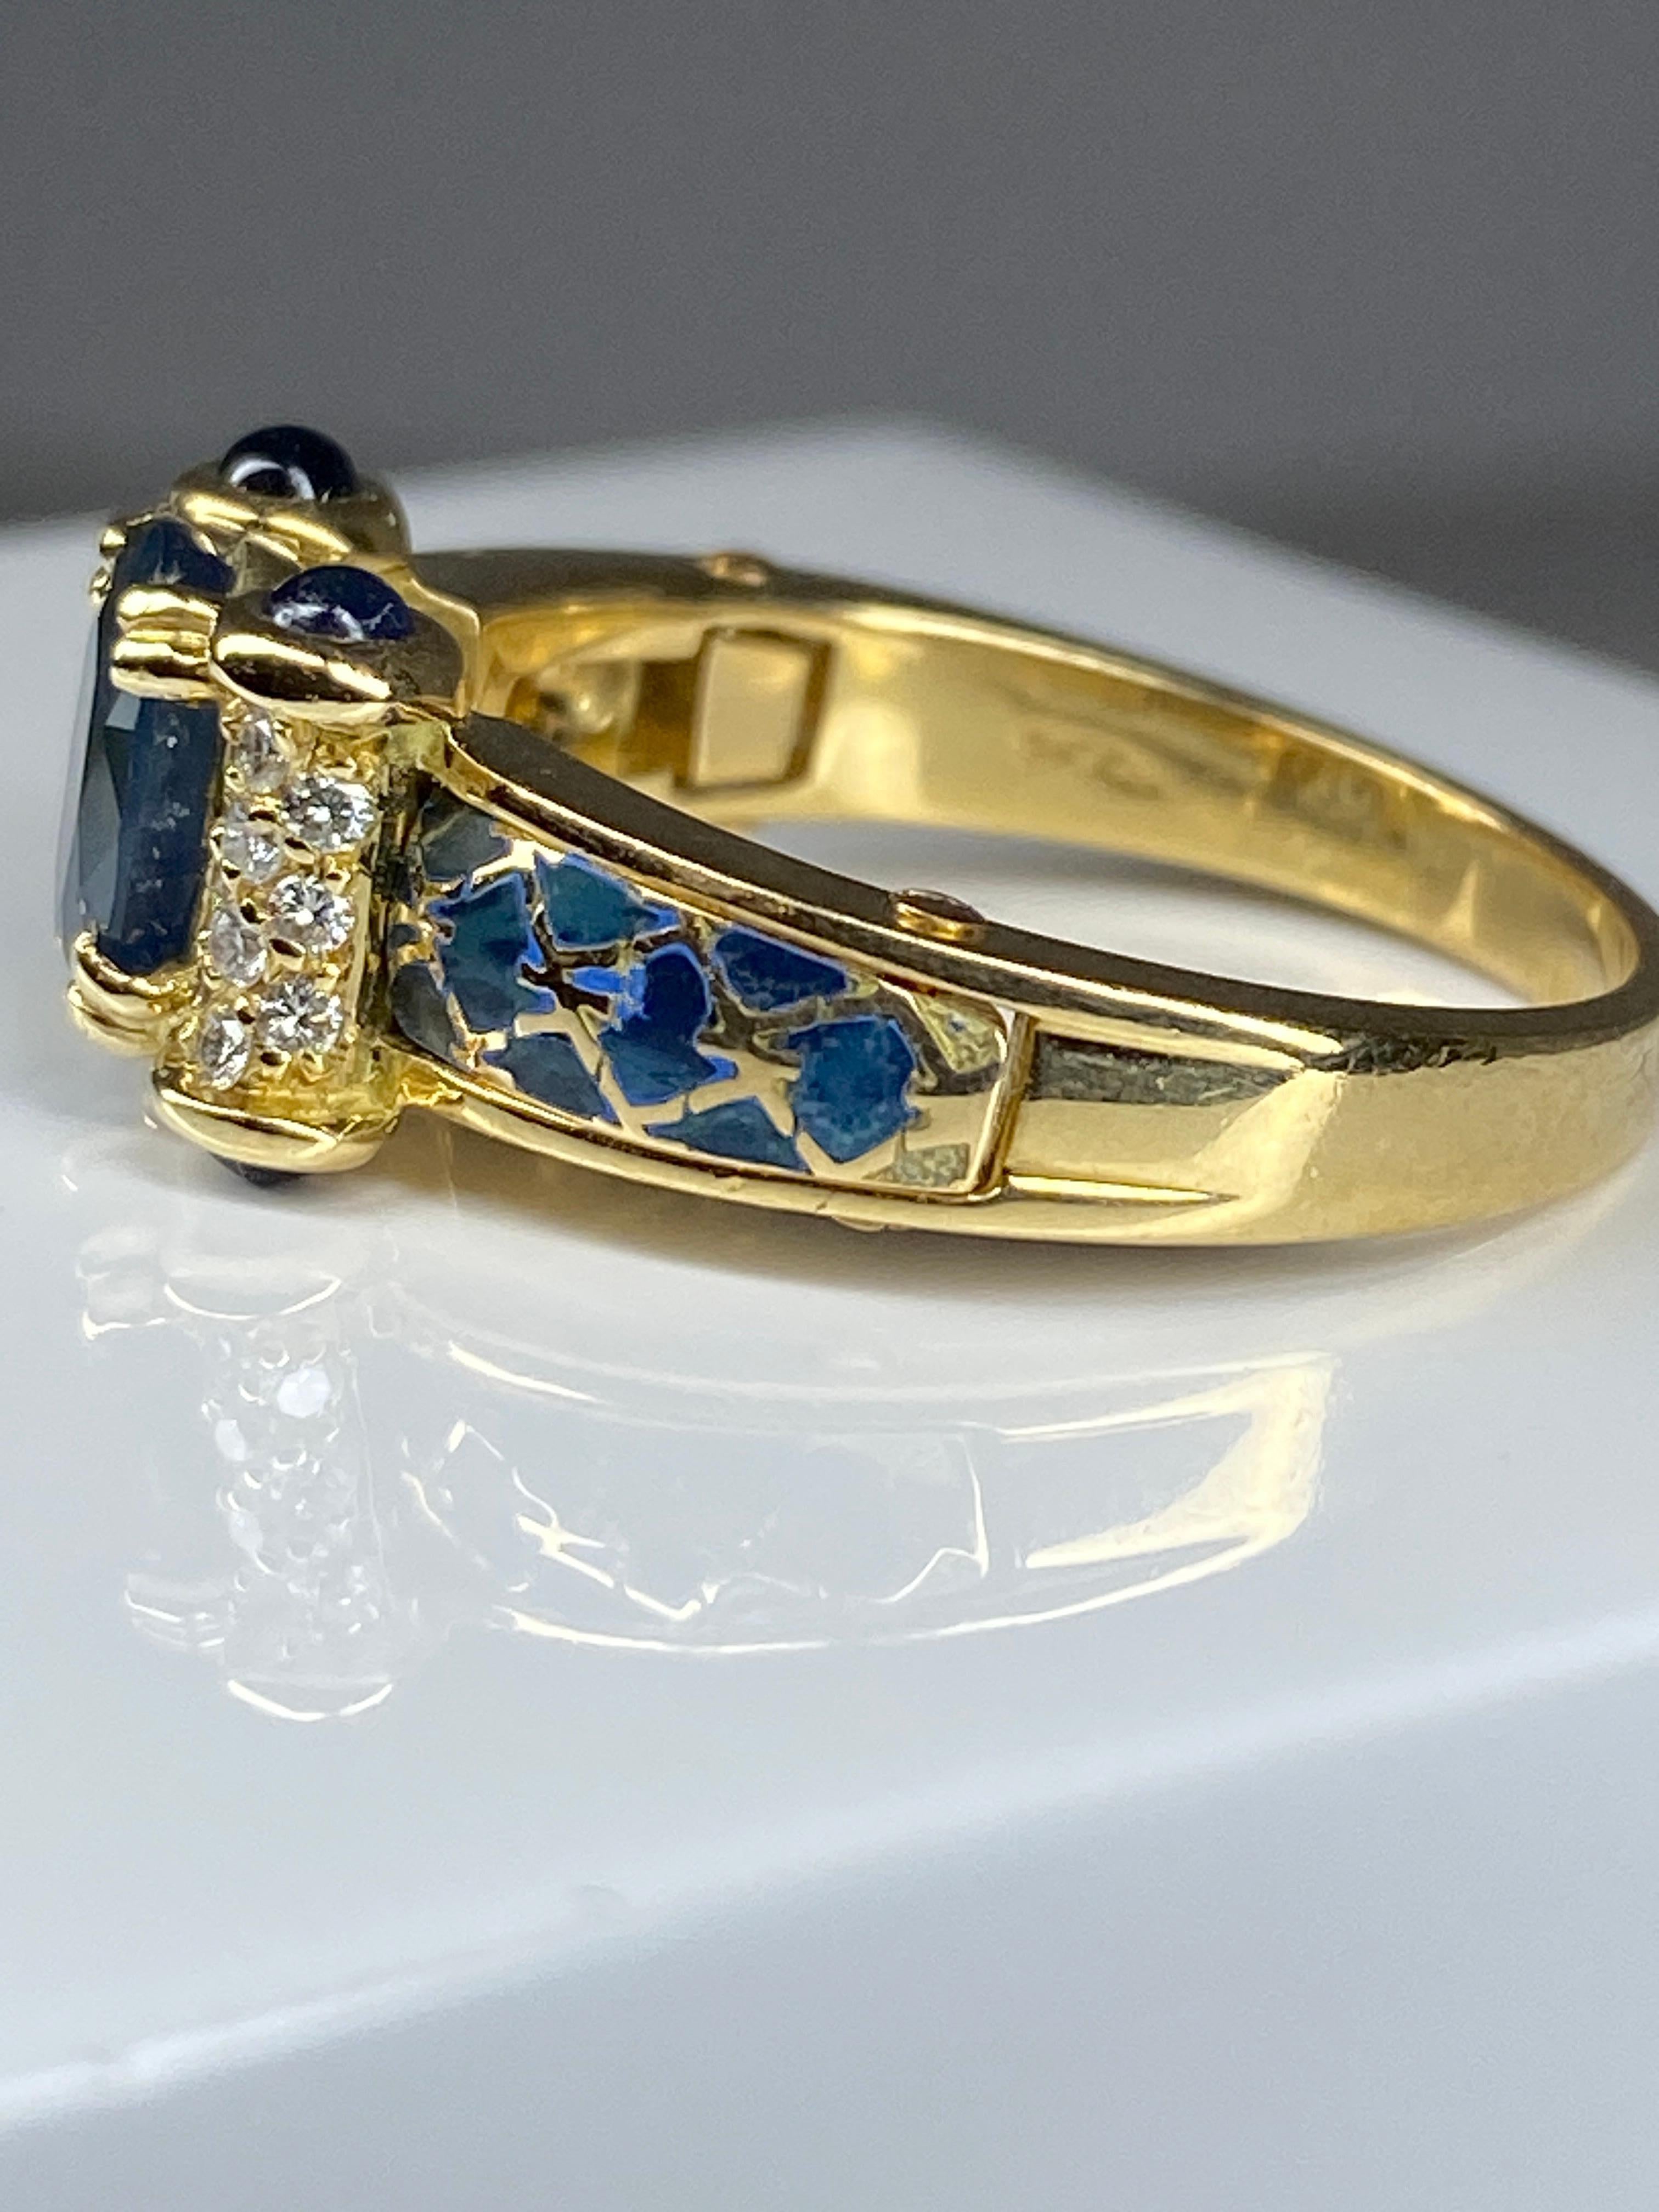 Korloff Ring in 18 Carat Gold: Sapphires, Diamonds, Blue Enamel For Sale 6